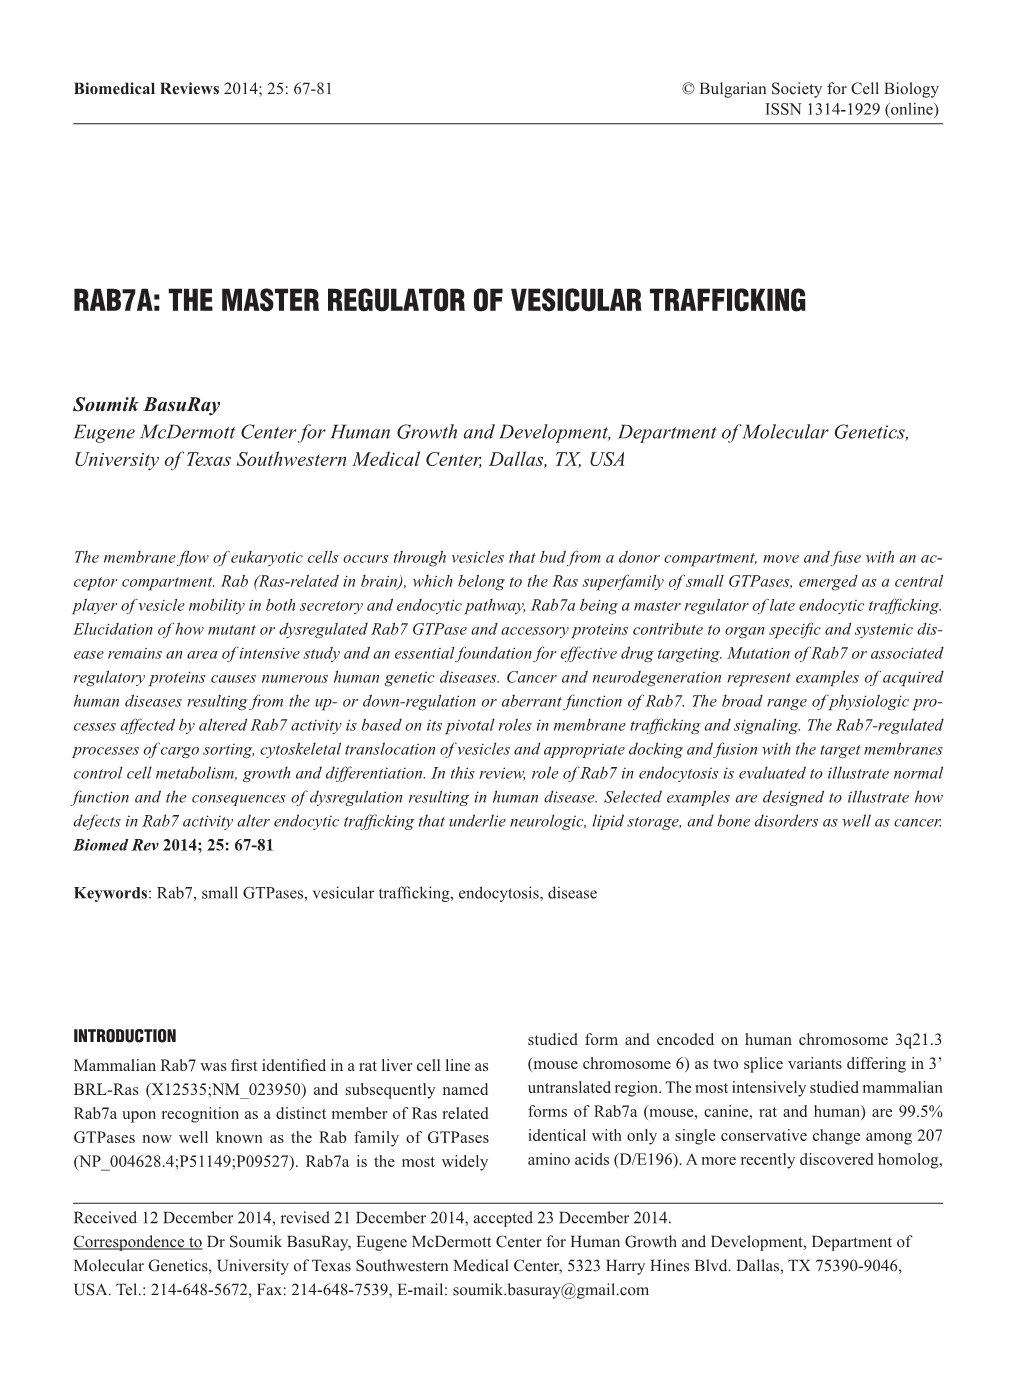 Rab7a: the Master Regulator of Vesicular Trafficking